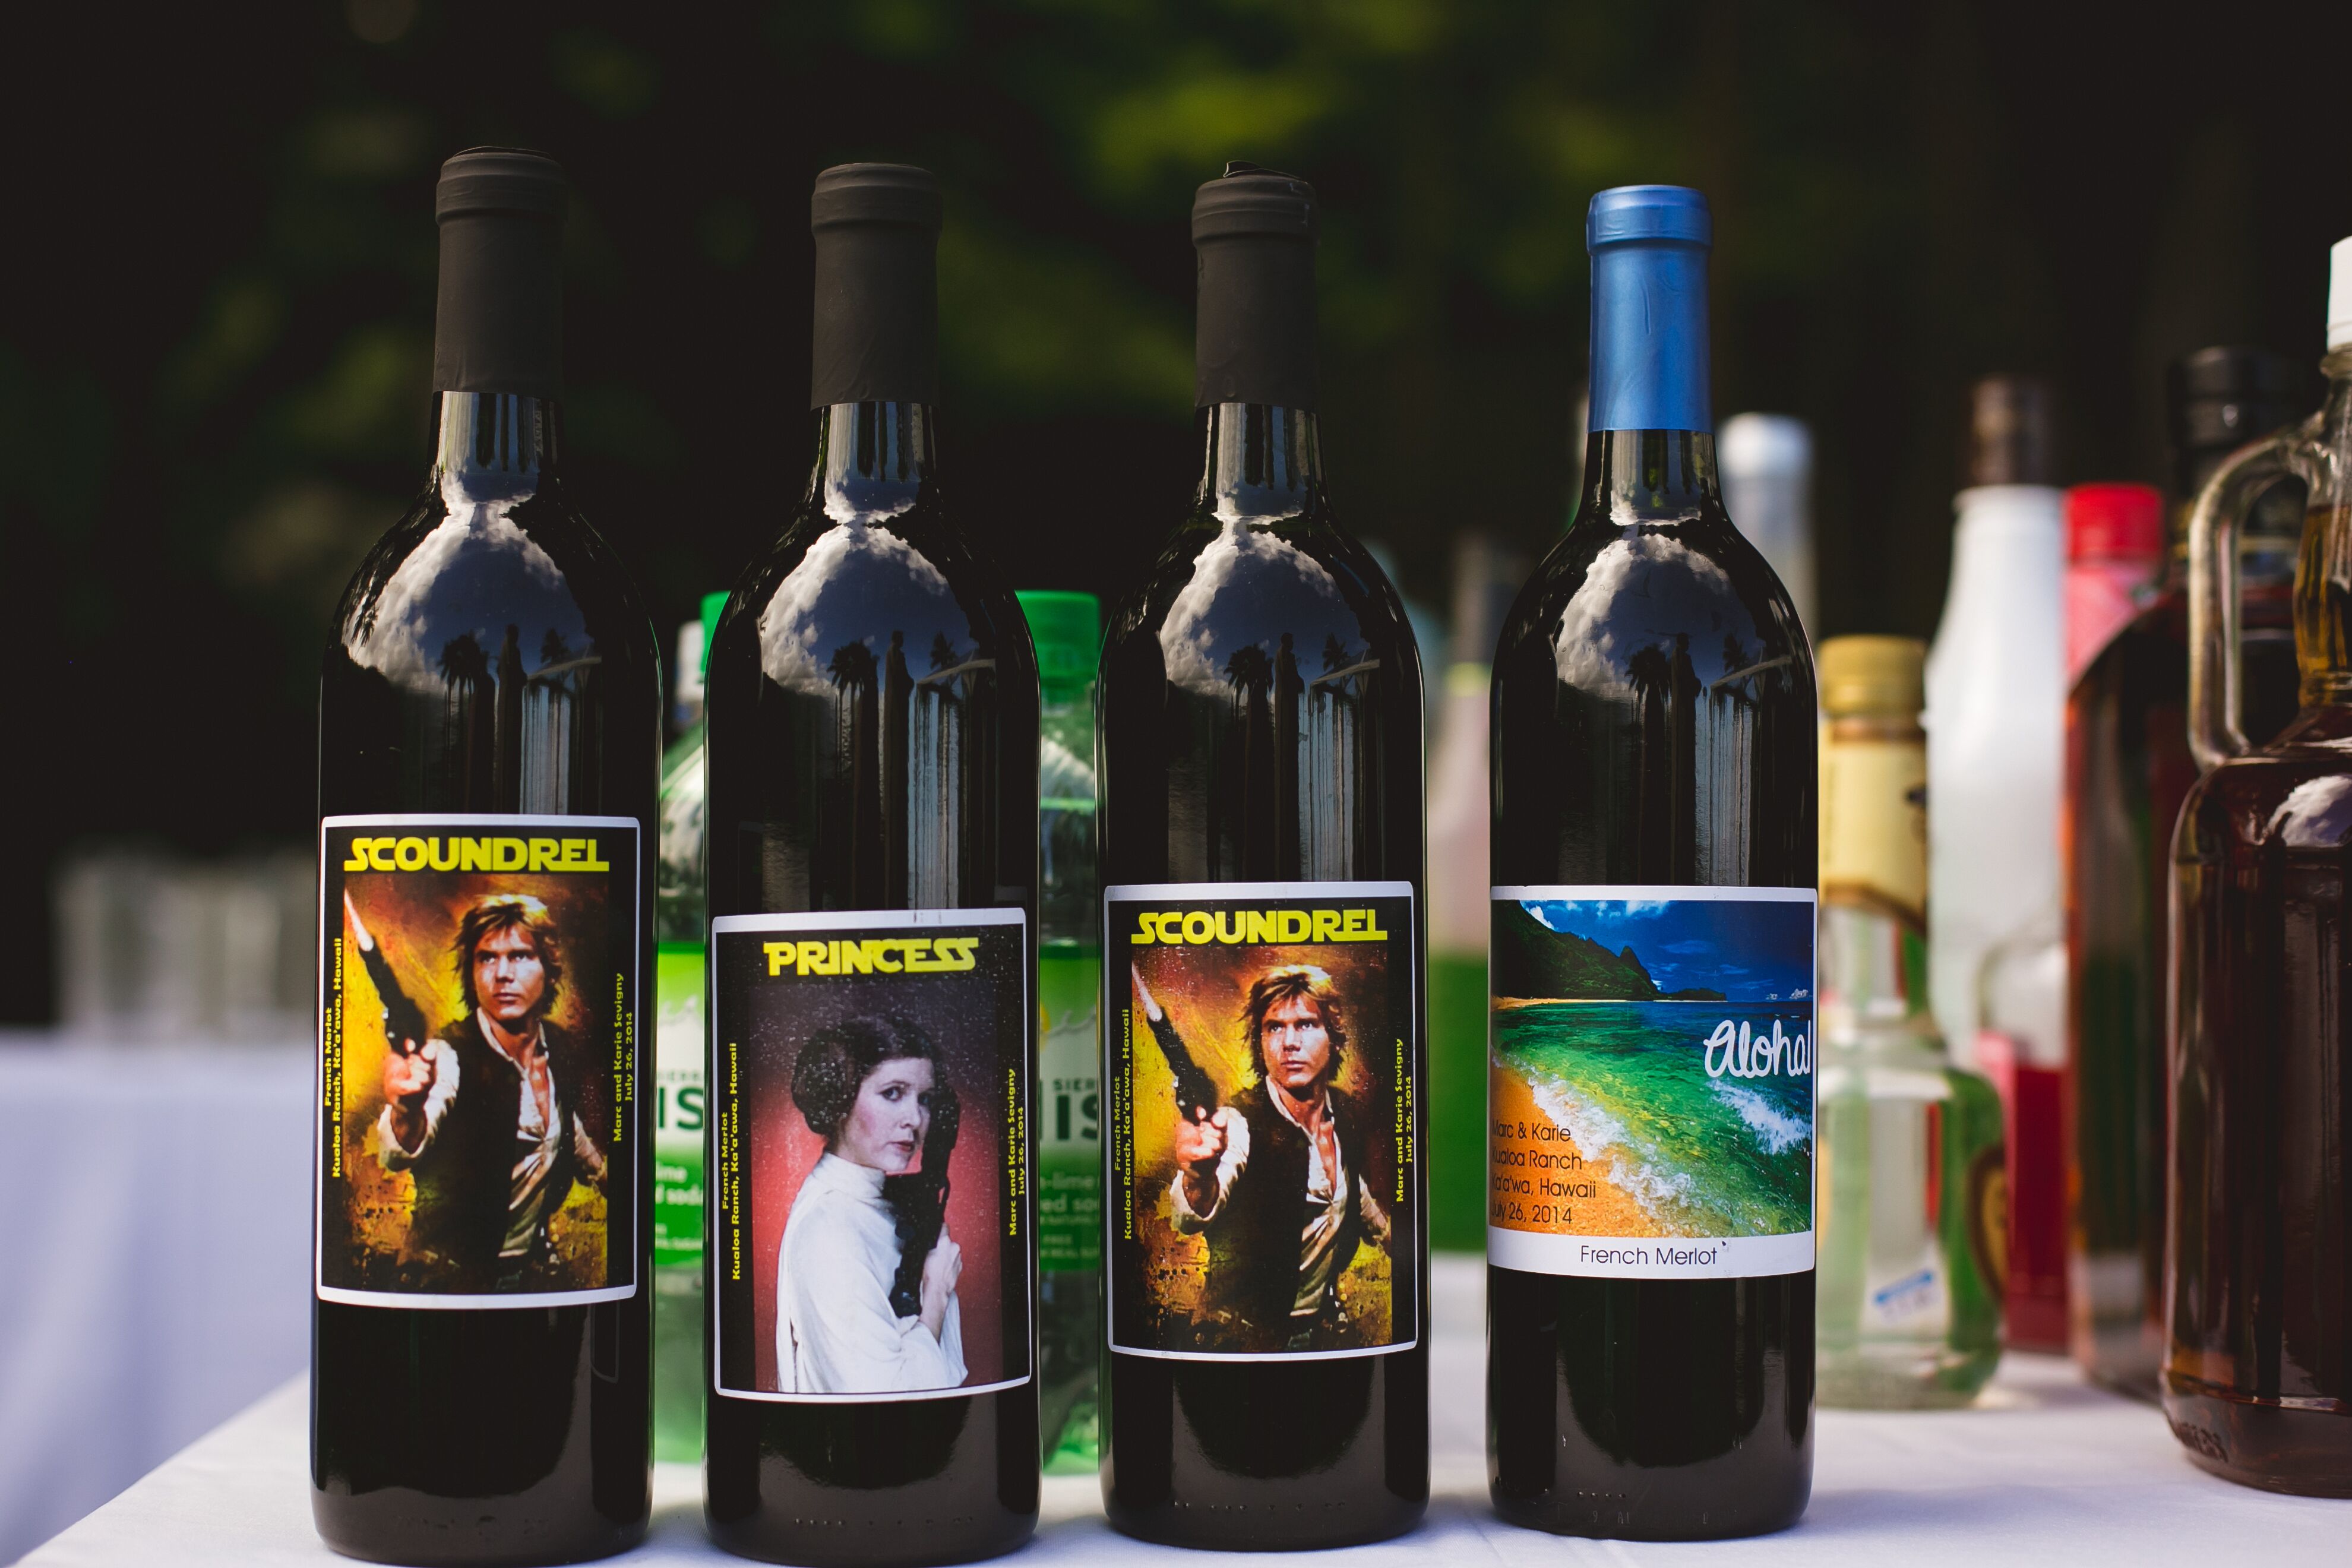 Star Wars theme wine label made in the online design studio